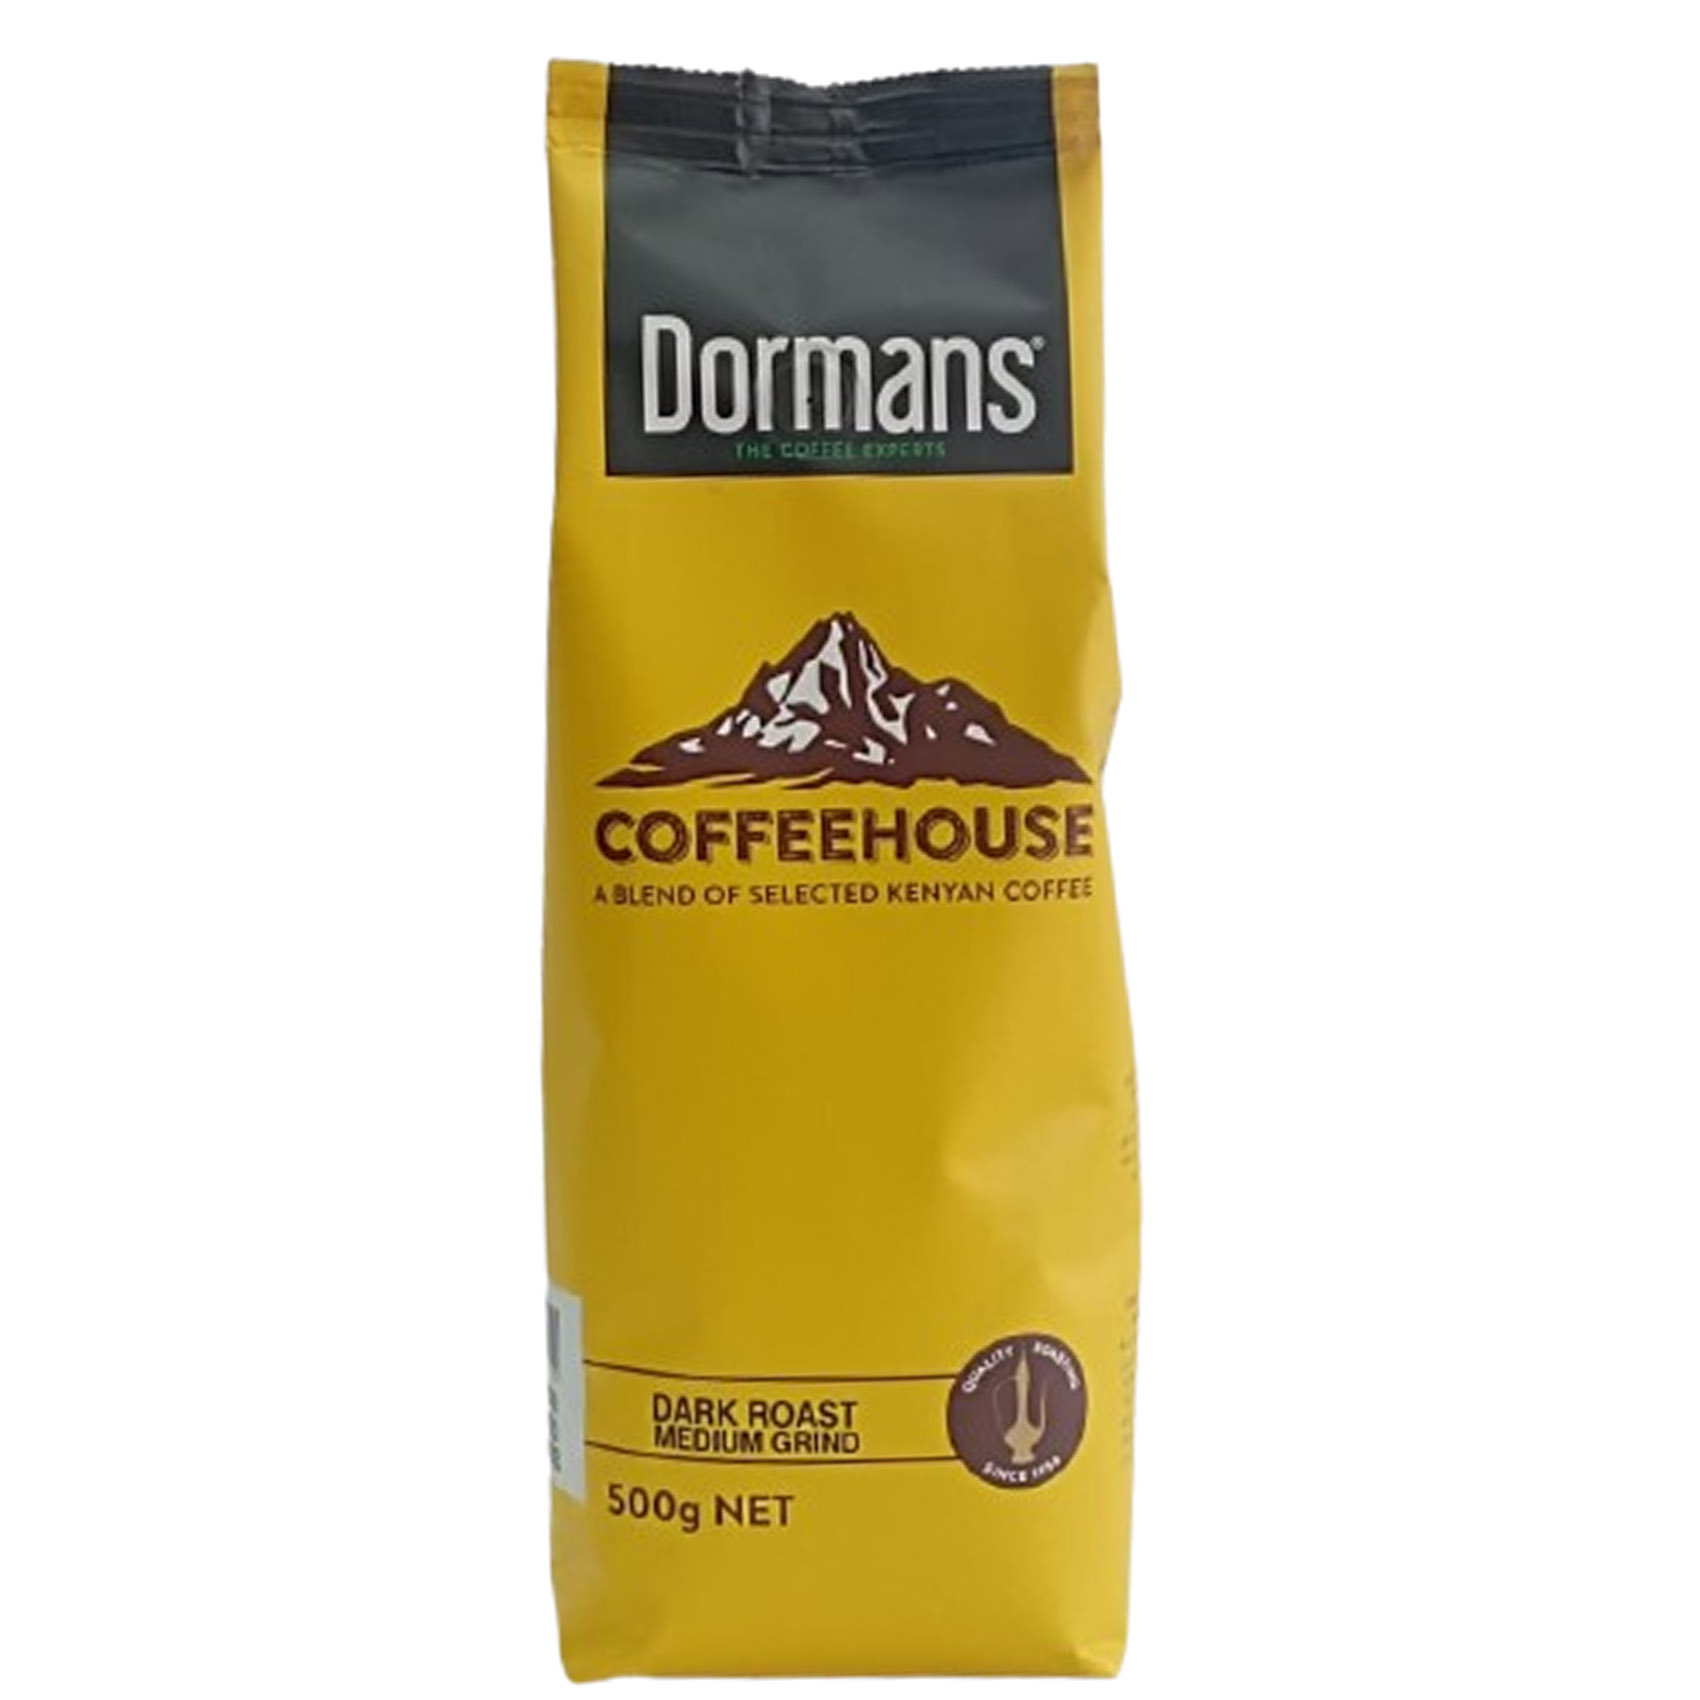 Dormans Coffeehouse Dark Roast Medium Grind Coffee 500g